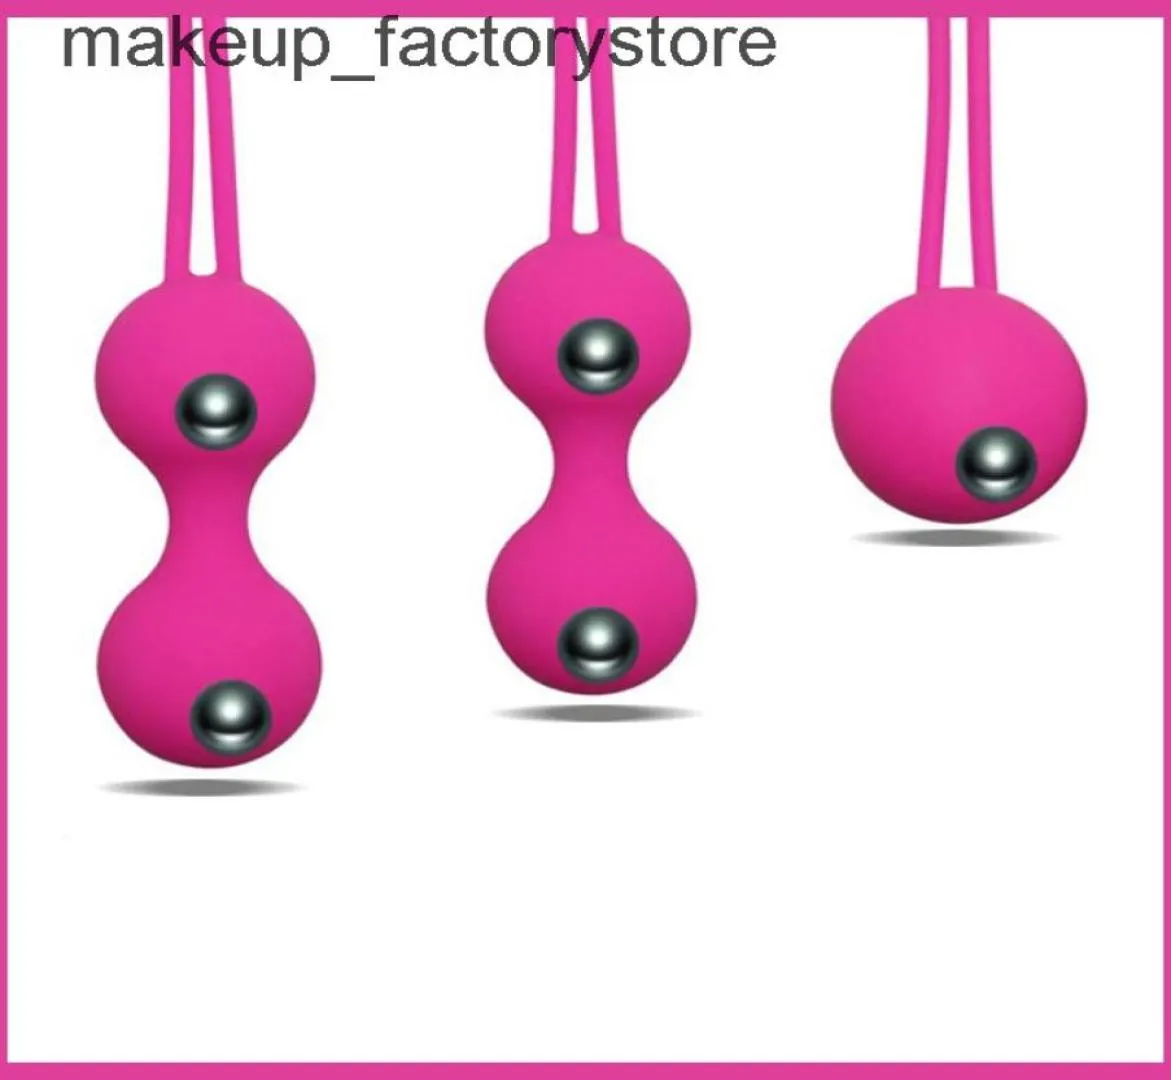 Massage Silicone Kegel Balls Vagina Muscle Trainer Erotic Product Boules de Geisha Sex Toys For Women Bolas Chinas Vaginal Balls S4728753